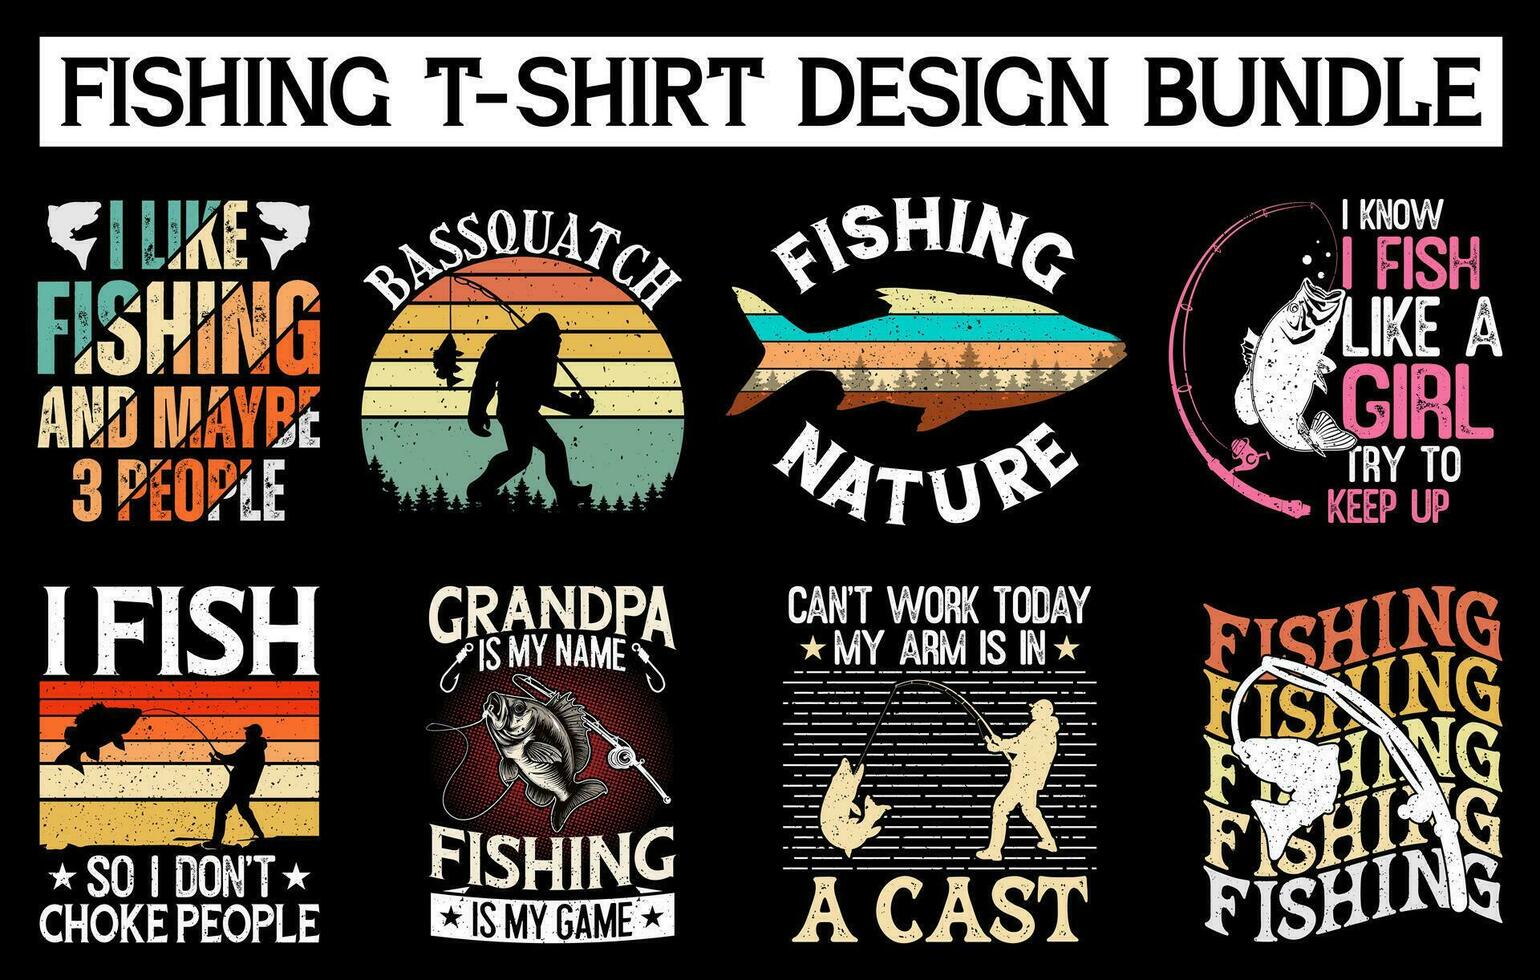 Fishing t shirt design bundle, Fishing vintage t shirt collection, vintage fishing tshirt set graphic illustration, Fishing vector emblem